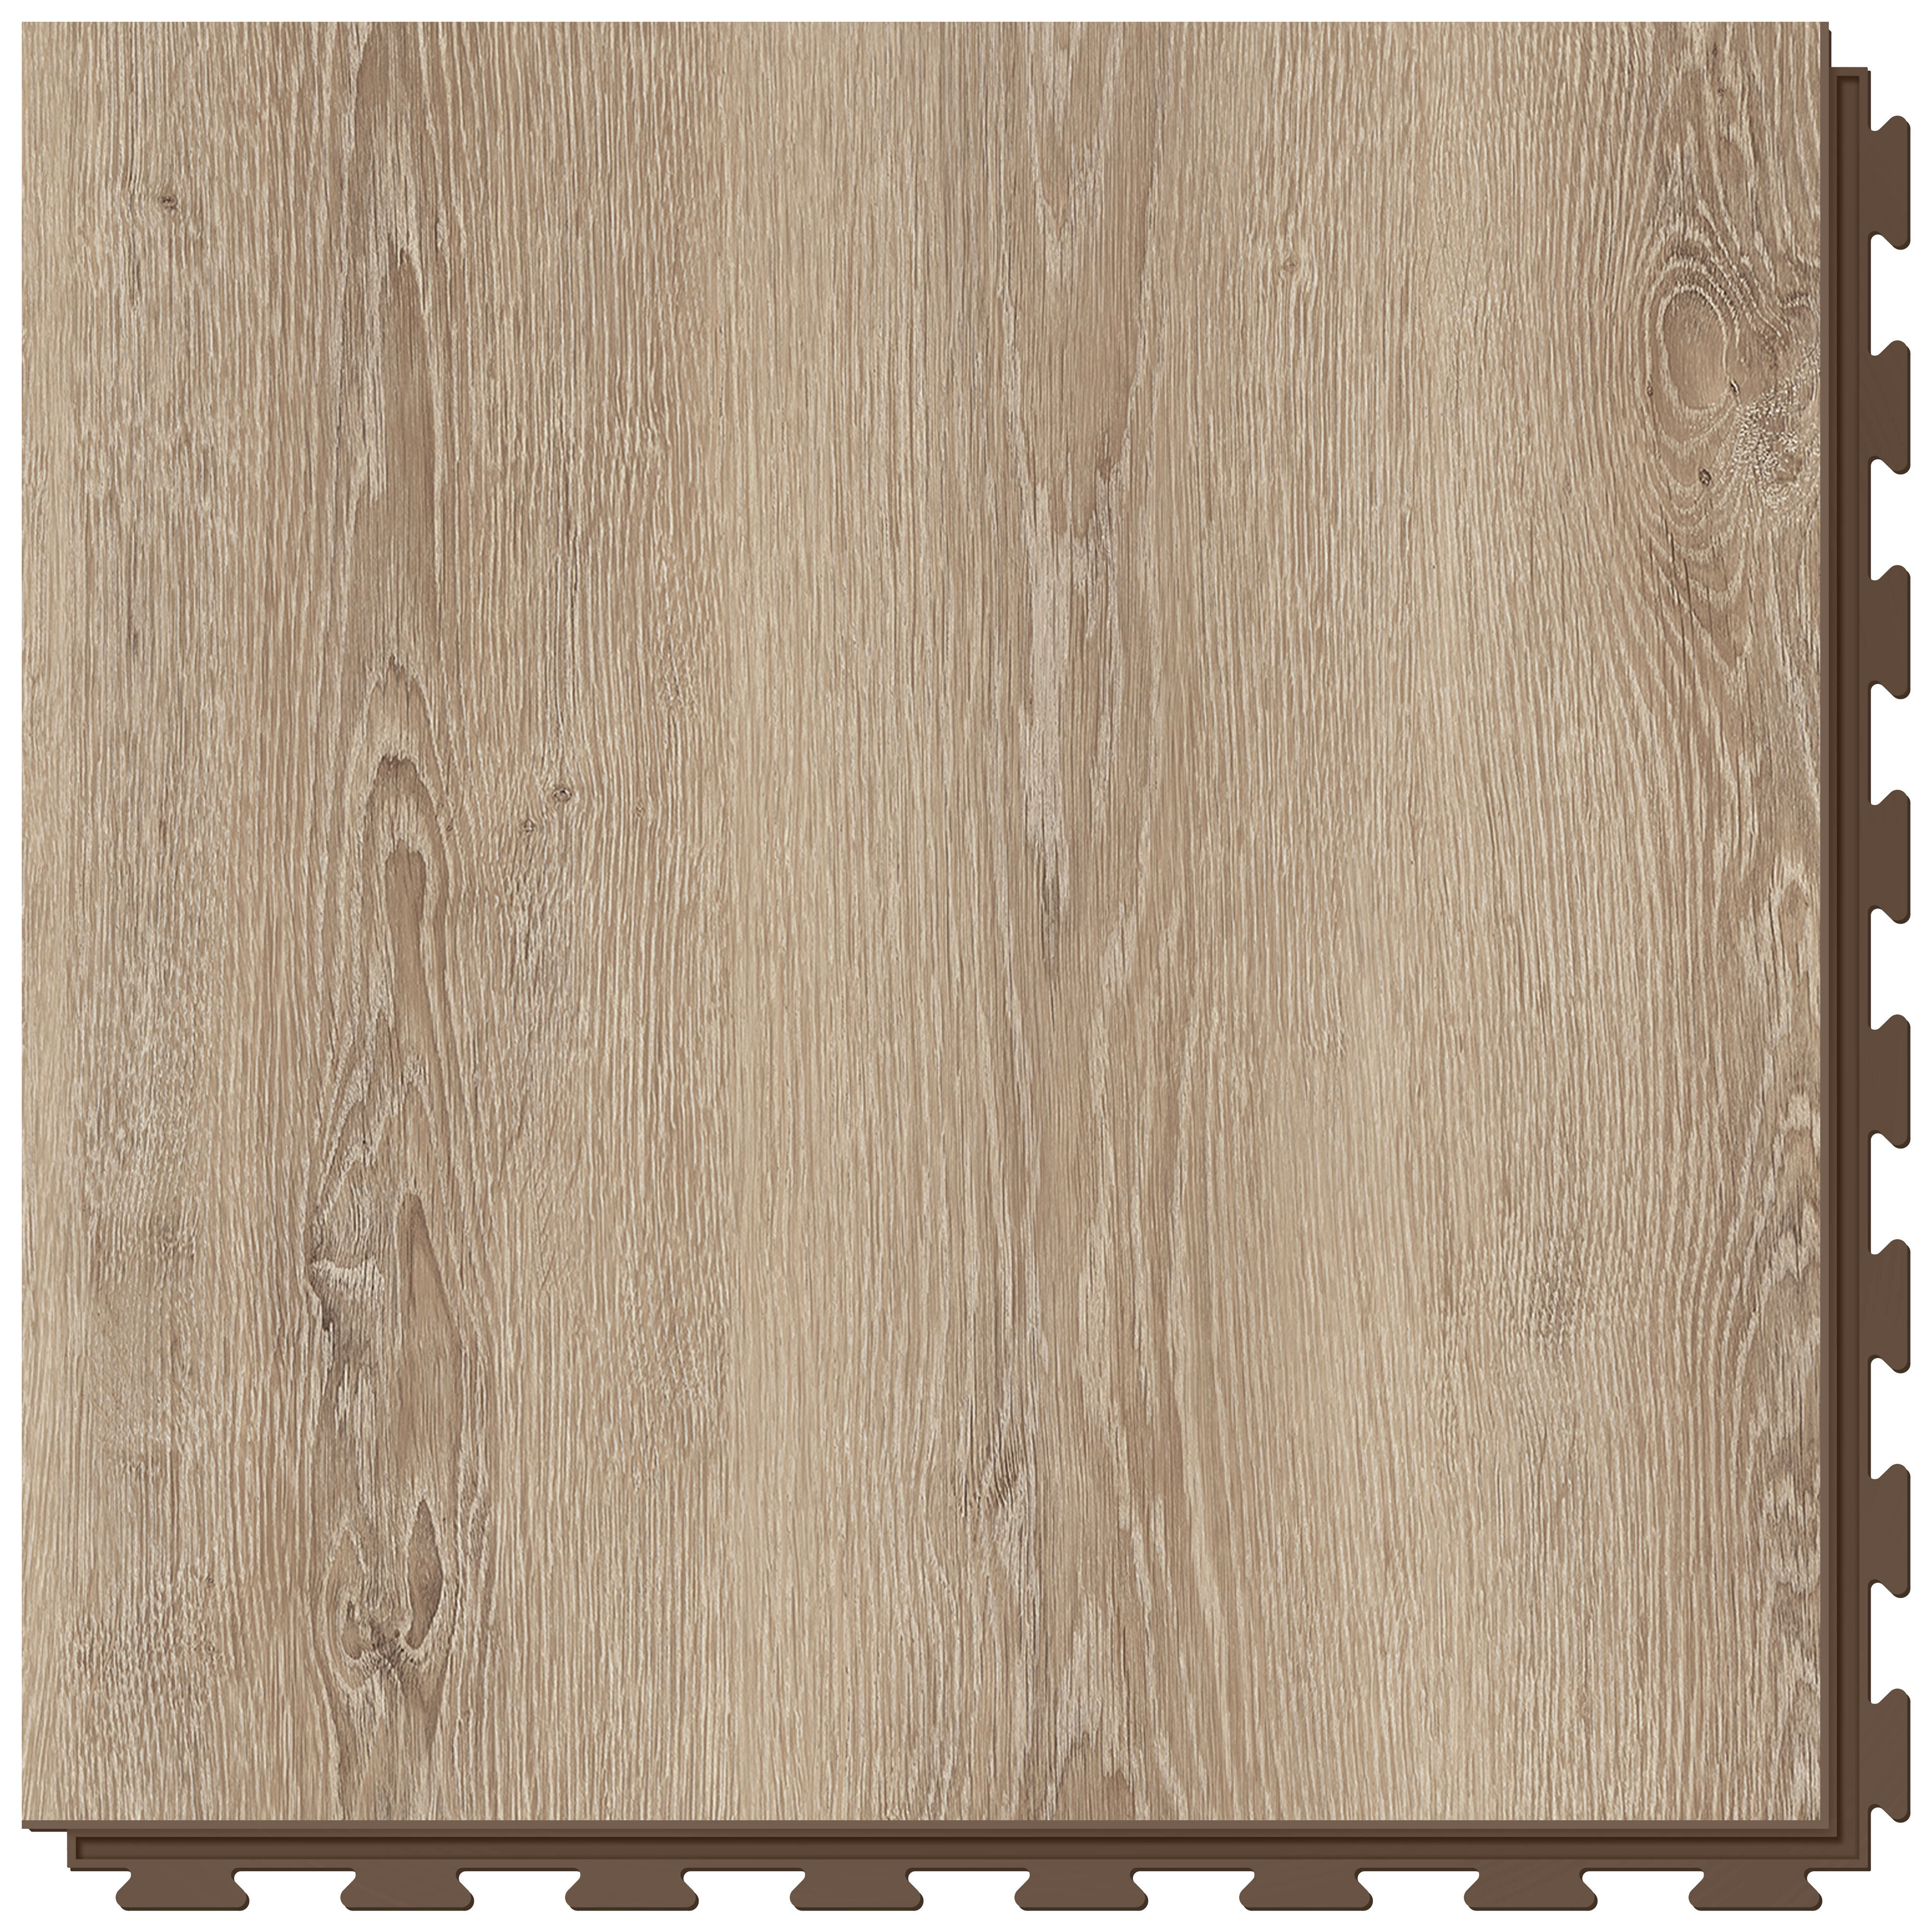 Hnědá vinylová PVC dlažba Fortelock Business Brown Tyrolean oak W001 - délka 66,8 cm, šířka 66,8 cm, výška 0,7 cm